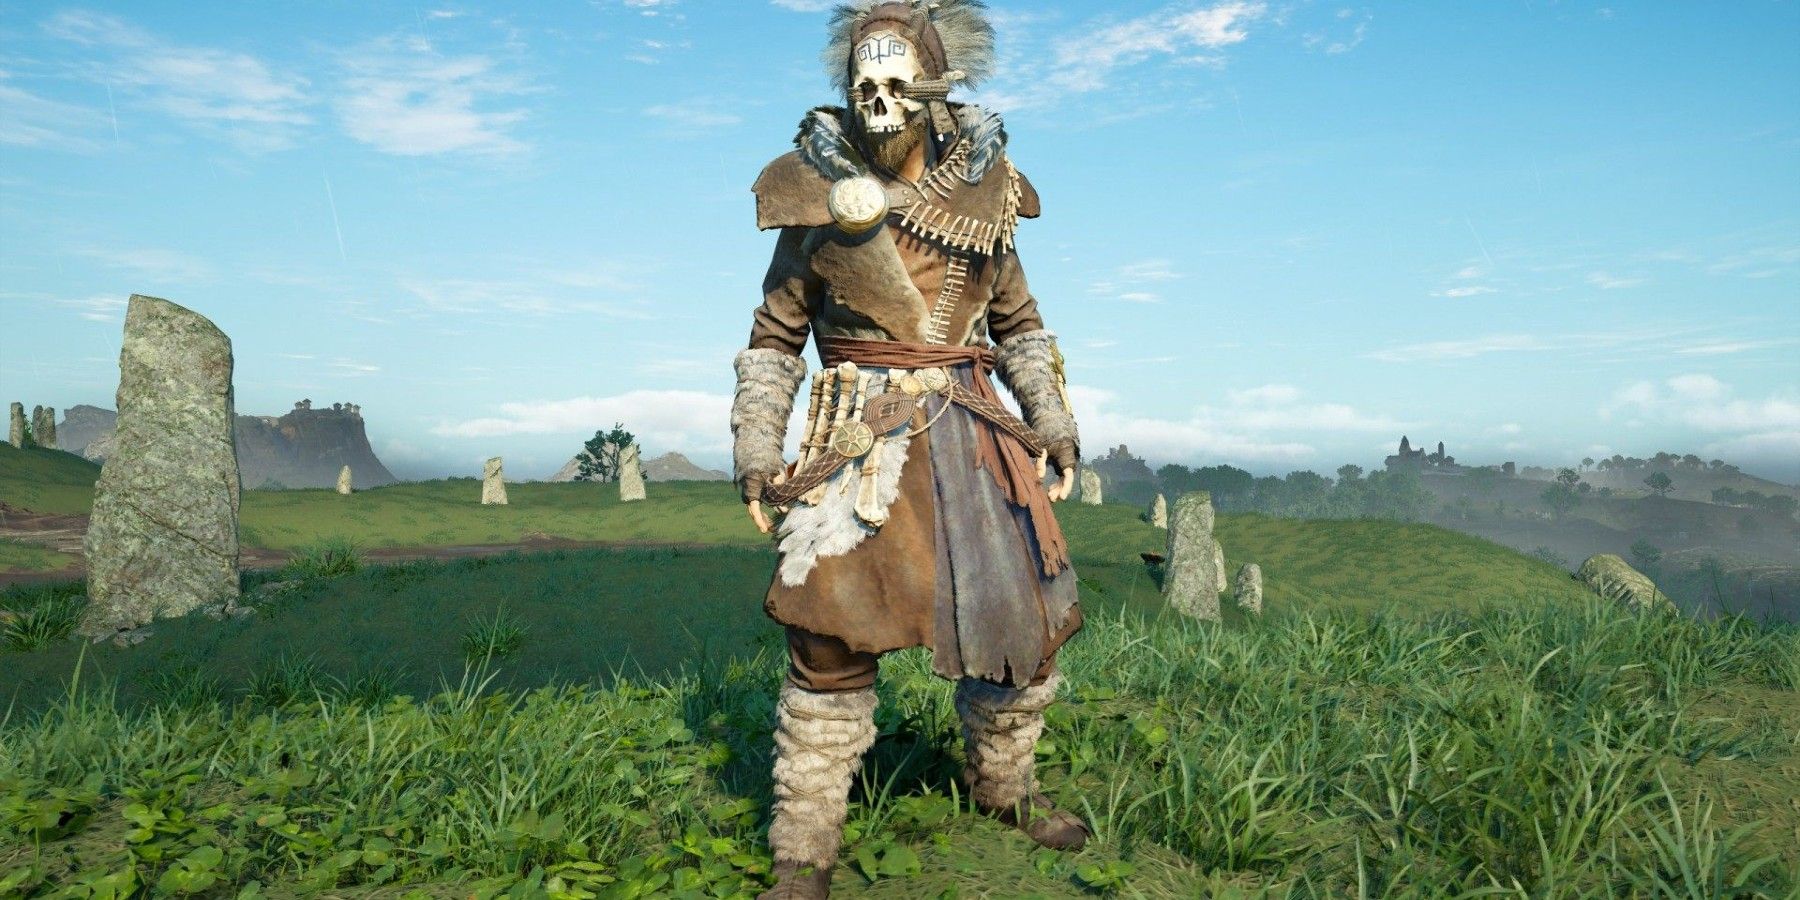 Assasisn's Creed Valhalla Druidic armor set standing in stoney field